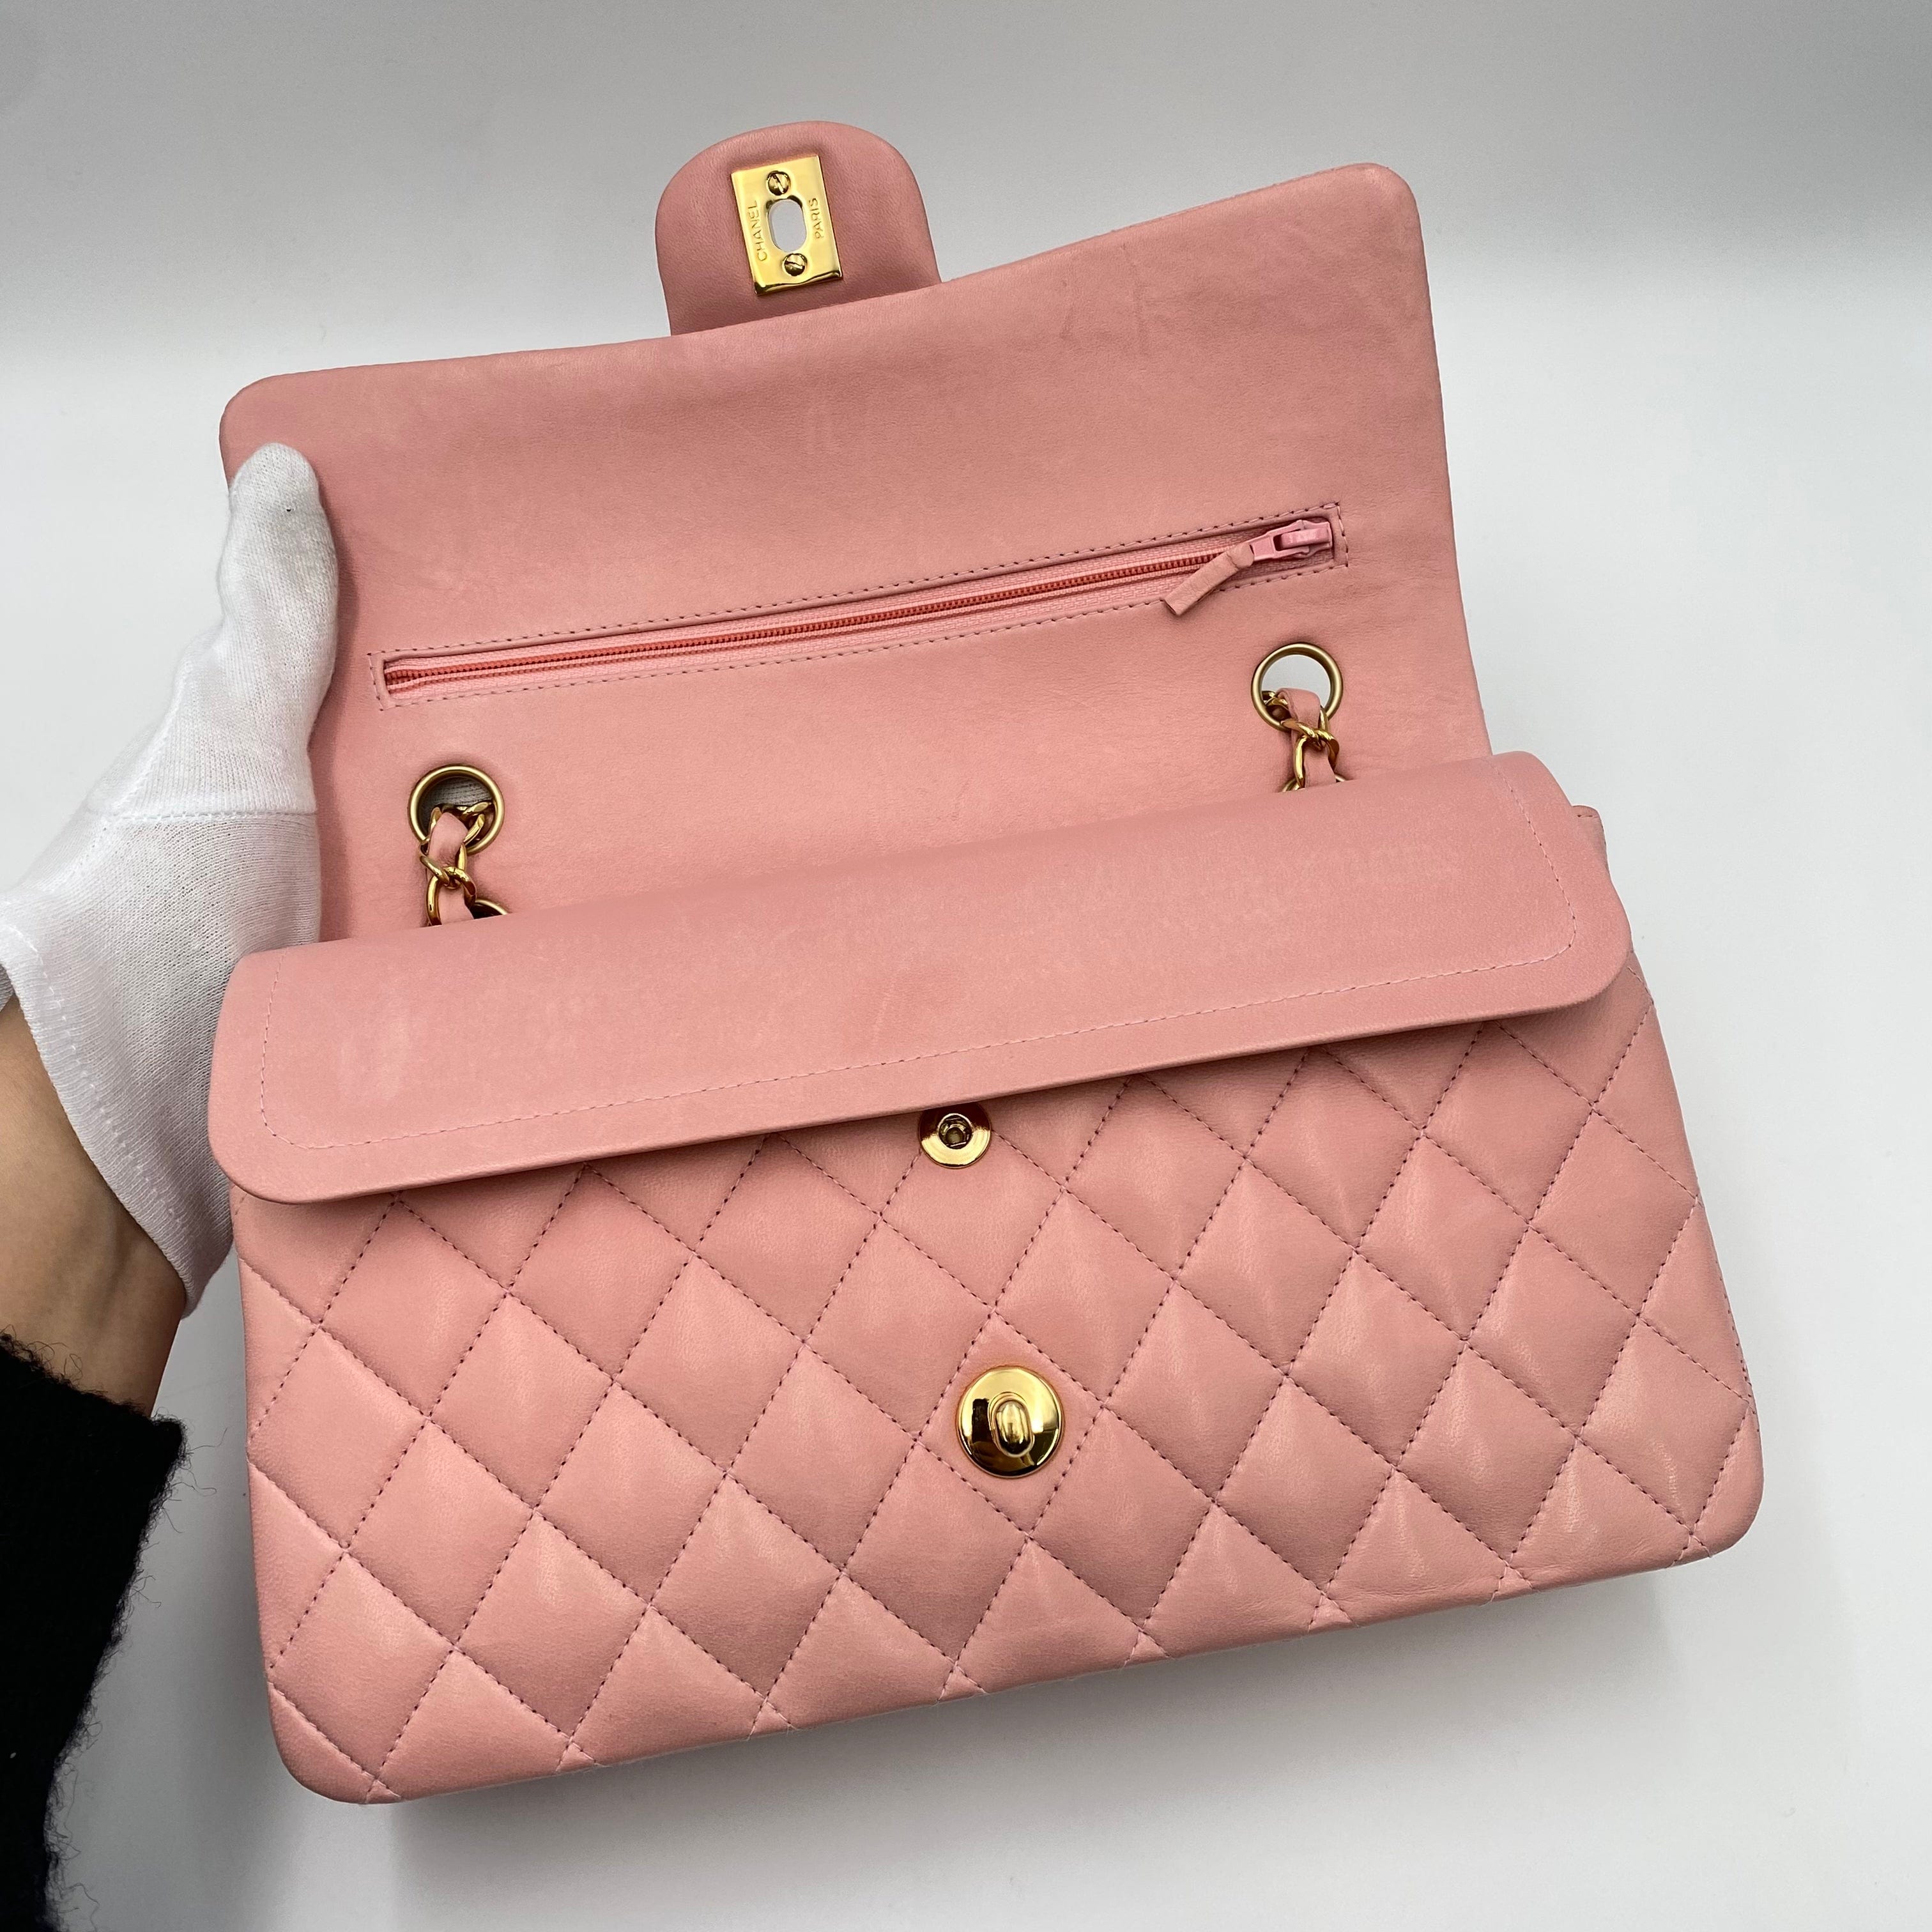 Chanel CHANEL VINTAGE CLASSIC FLAP MEDIUM CHAIN SHOULDER BAG PINK LAMB SKIN